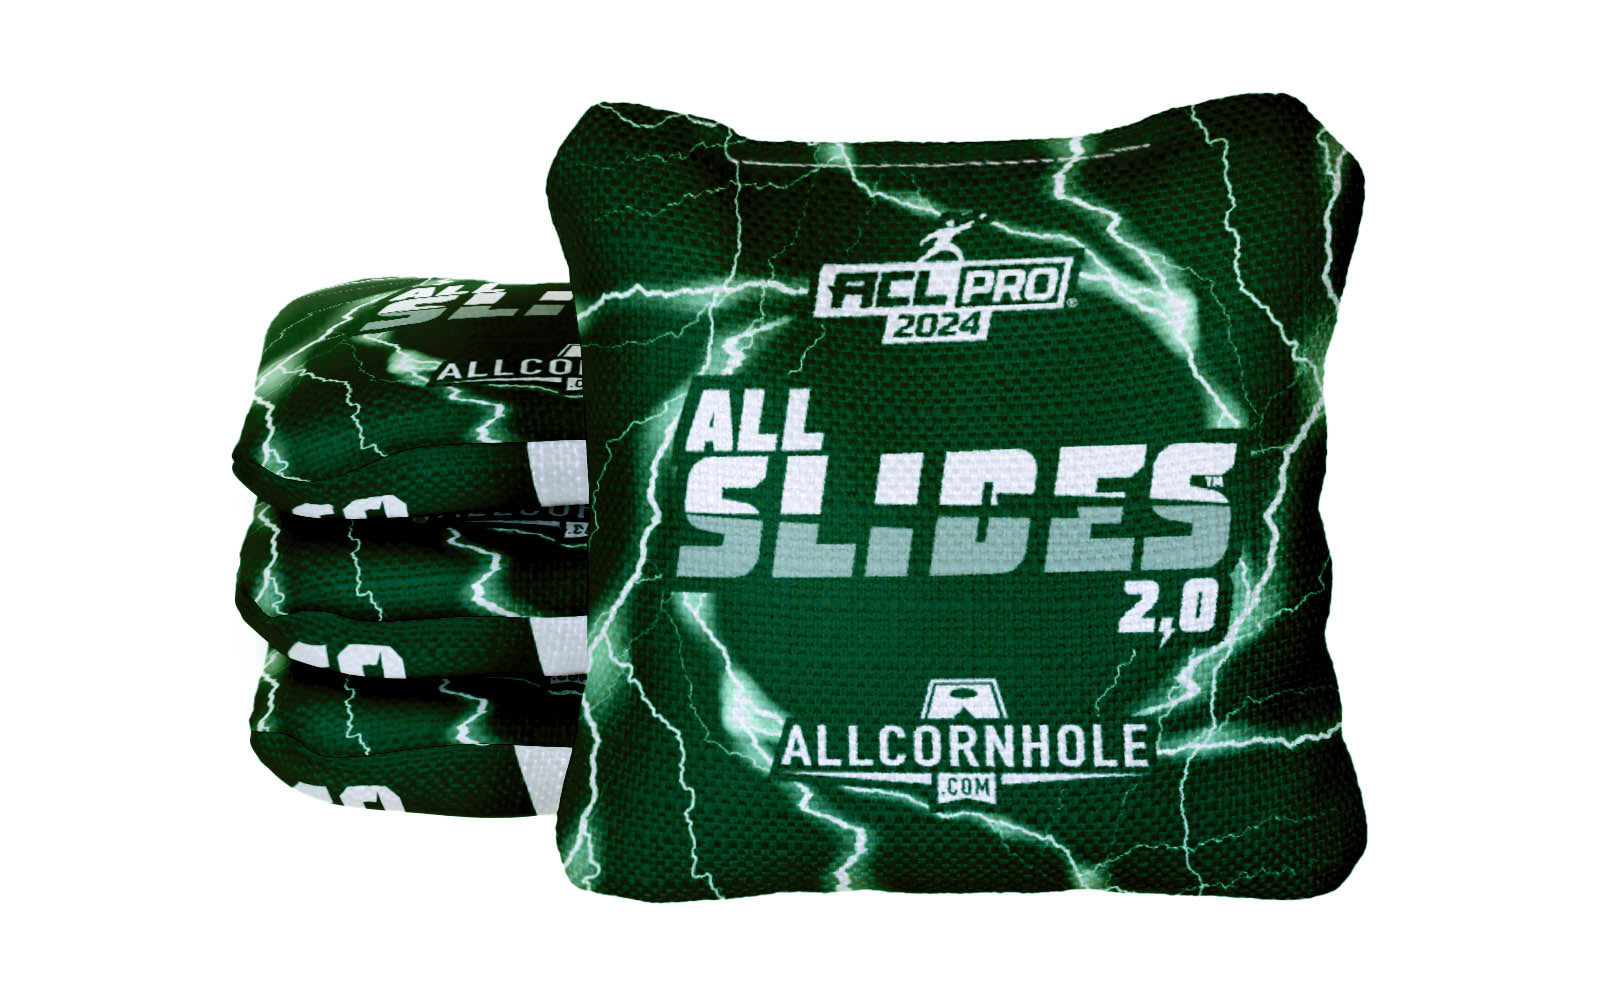 Officially Licensed Collegiate Cornhole Bags - AllCornhole All-Slide 2.0 - Set of 4 - Michigan State University